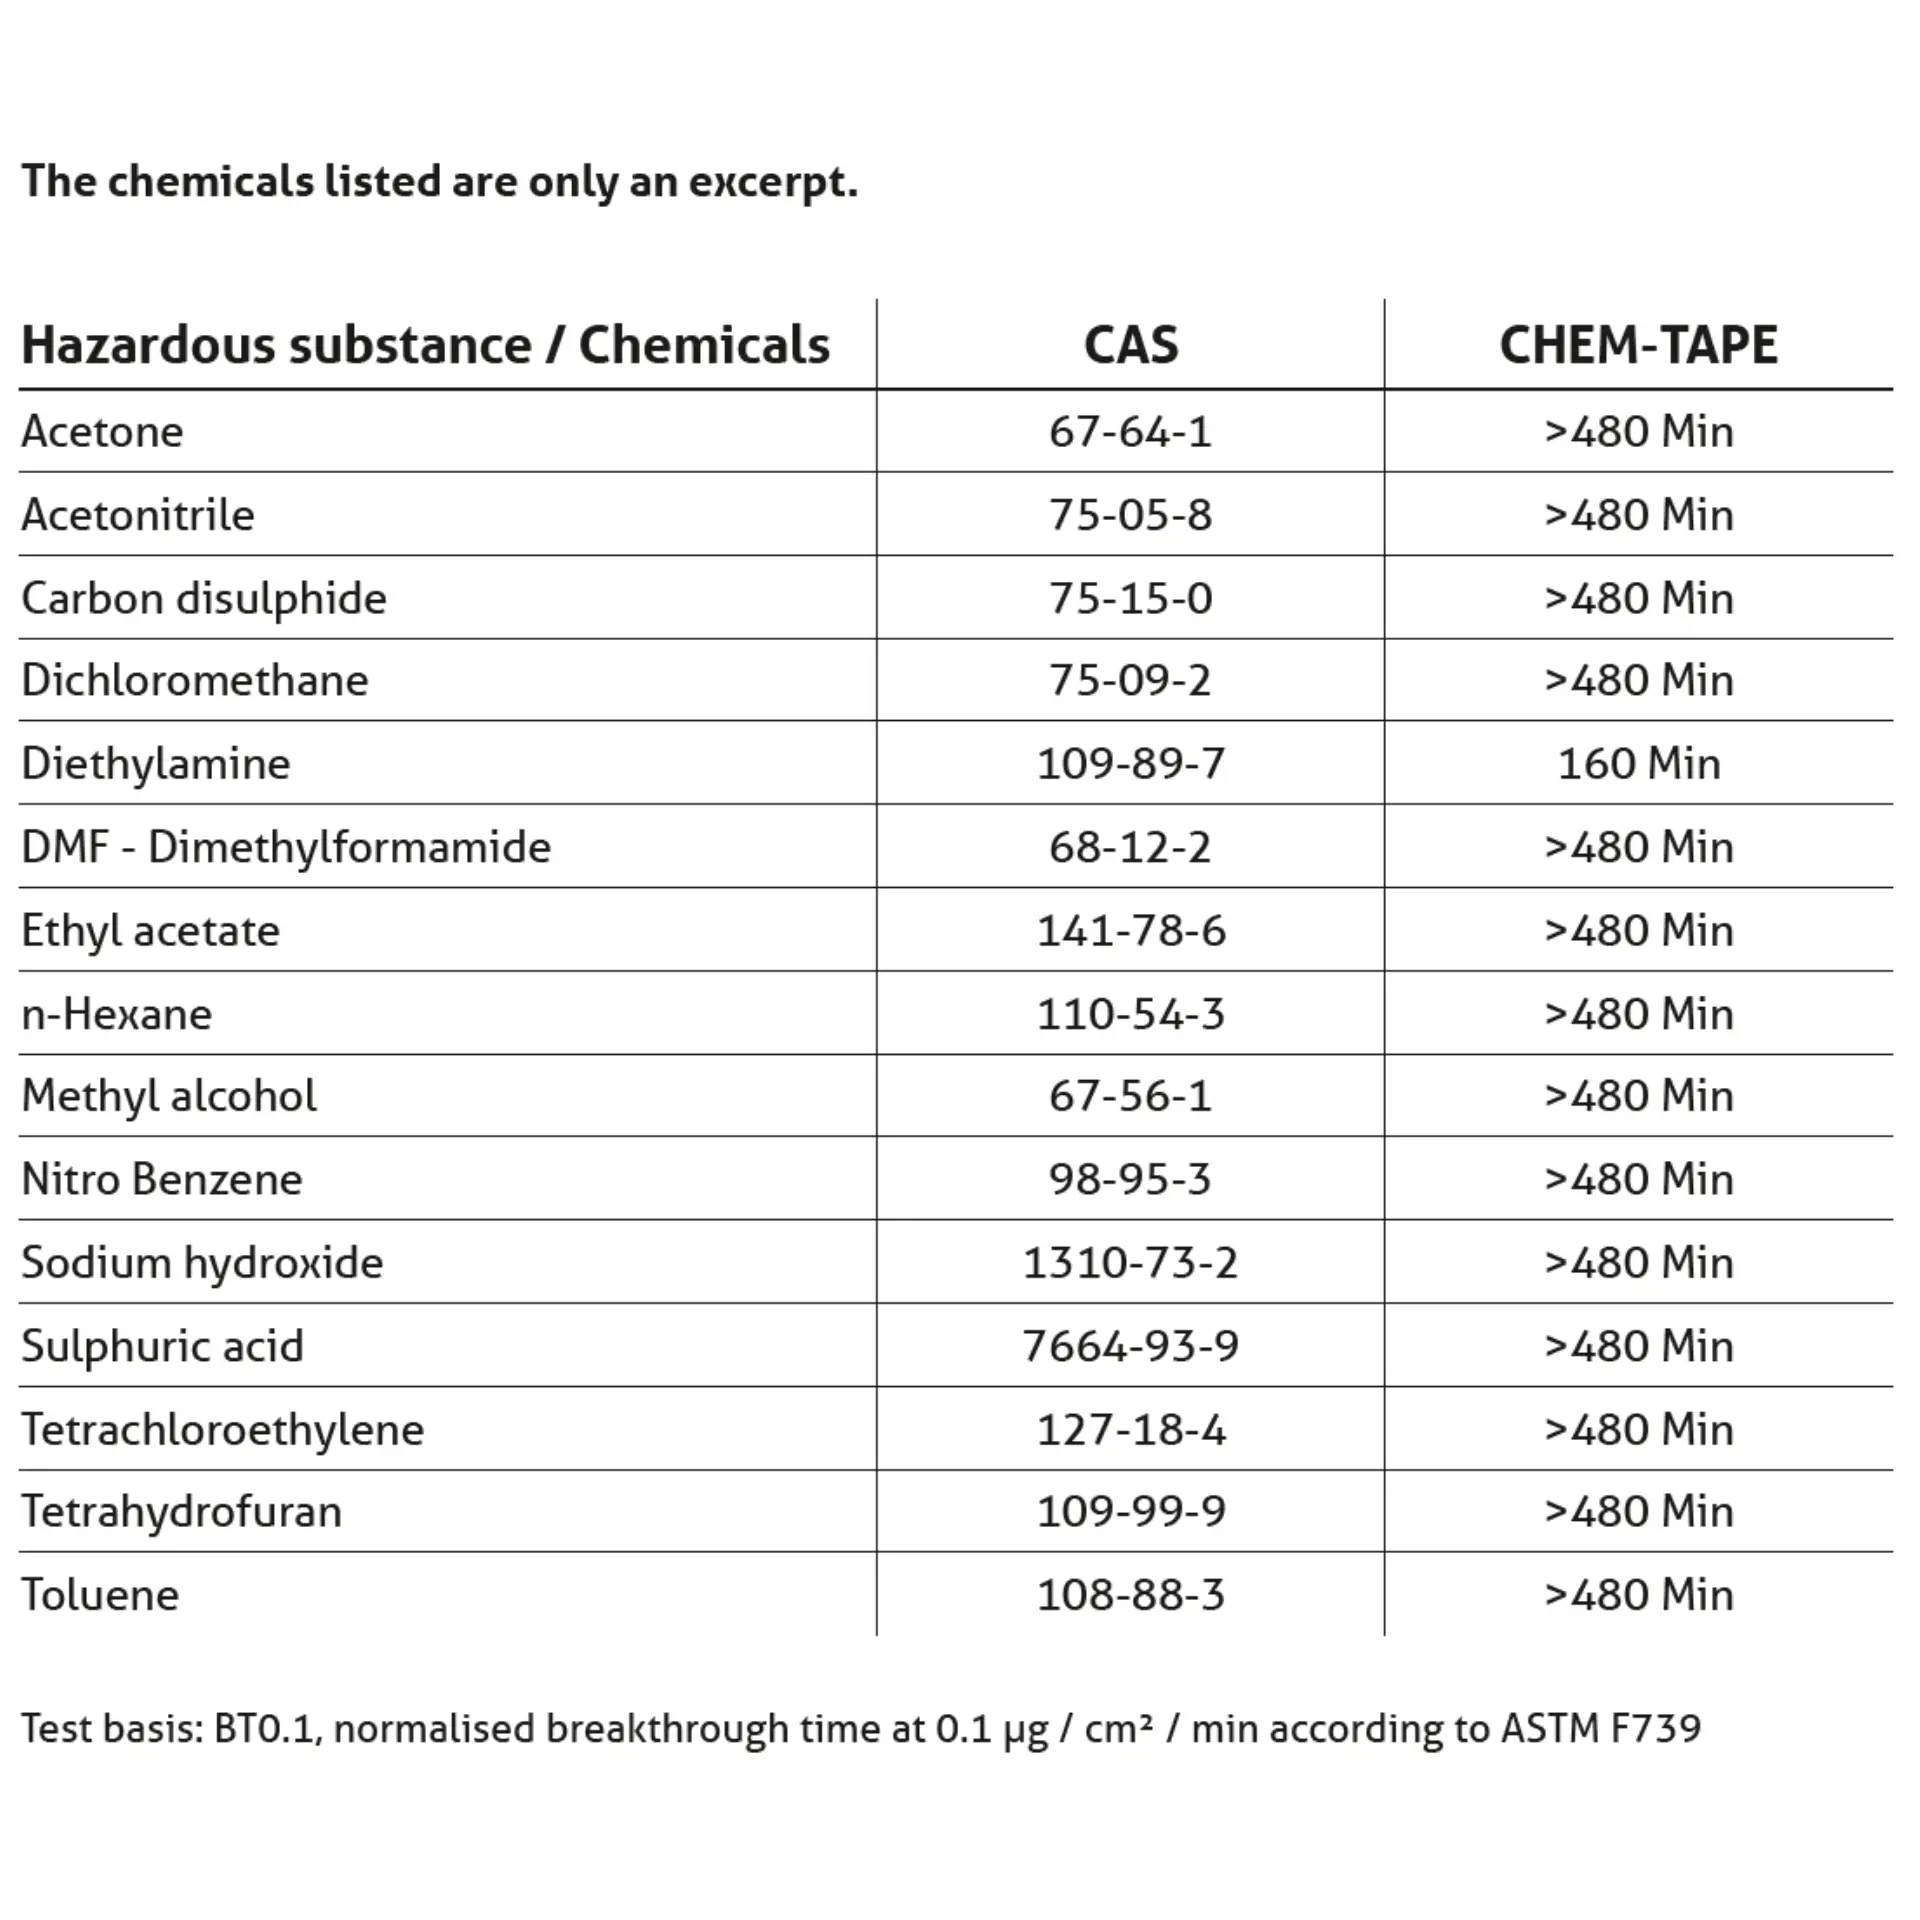 Imagen de producto Chem-Tape® Cinta adhesiva impermeable a químicos